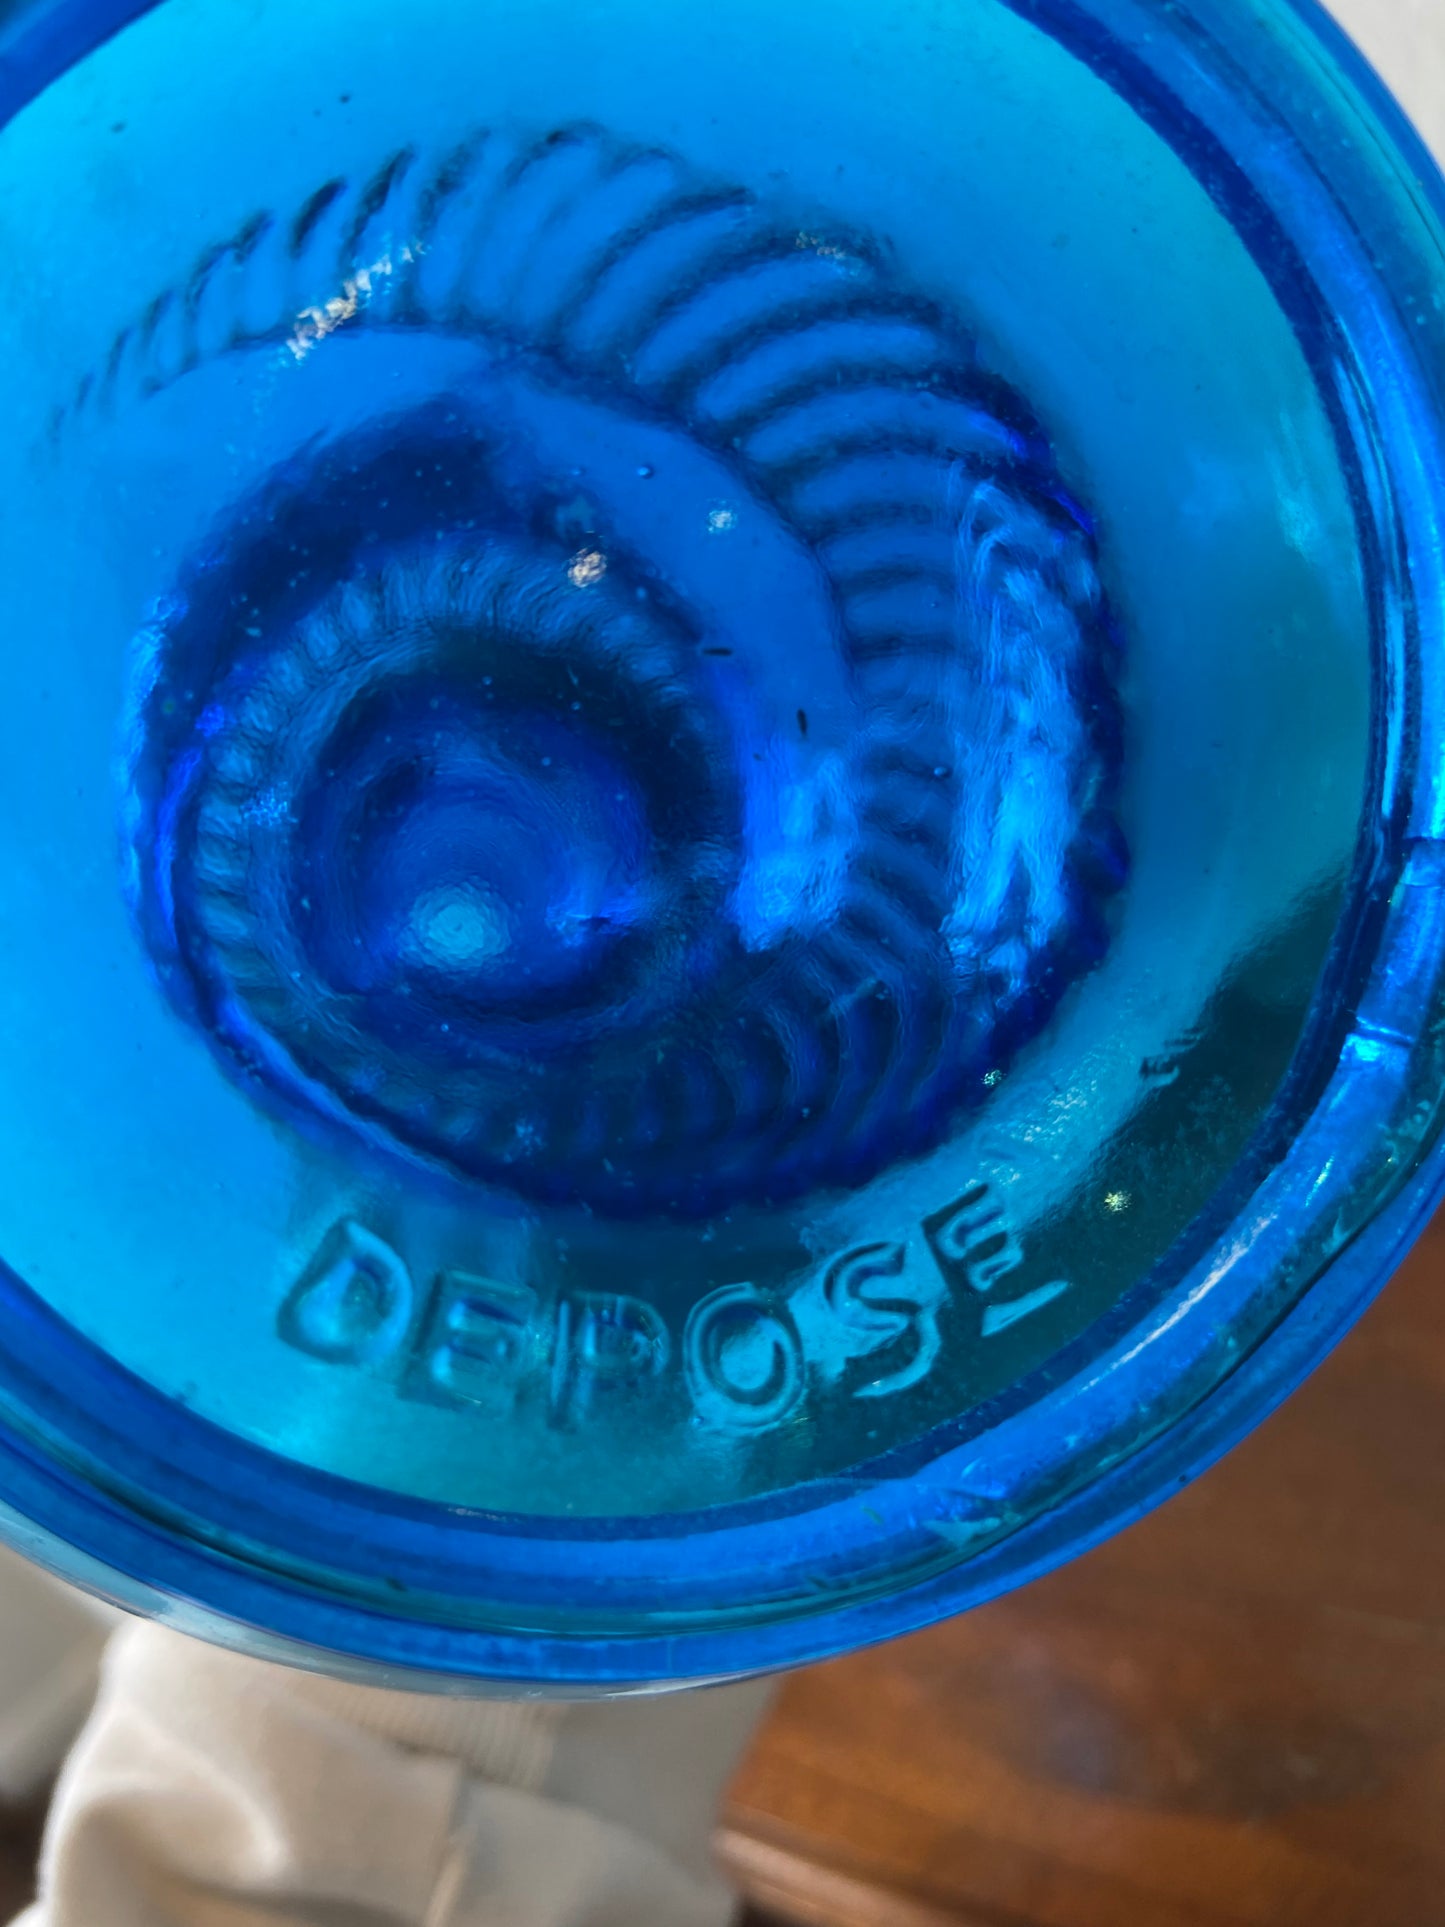 Depose Blue Glass Genie Bottles